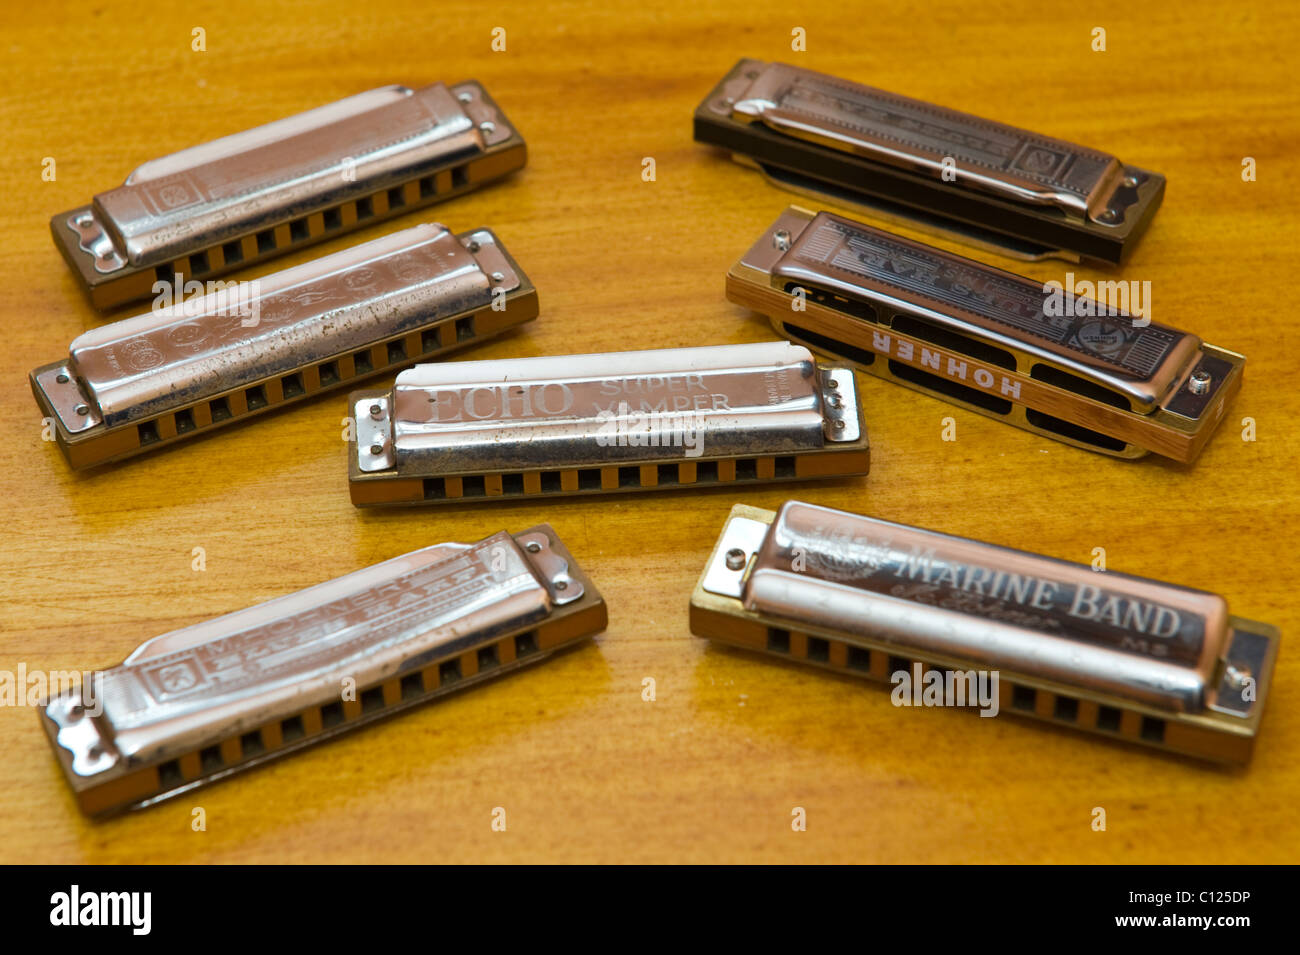 https://c8.alamy.com/comp/C125DP/collection-of-vintage-harmonicas-C125DP.jpg